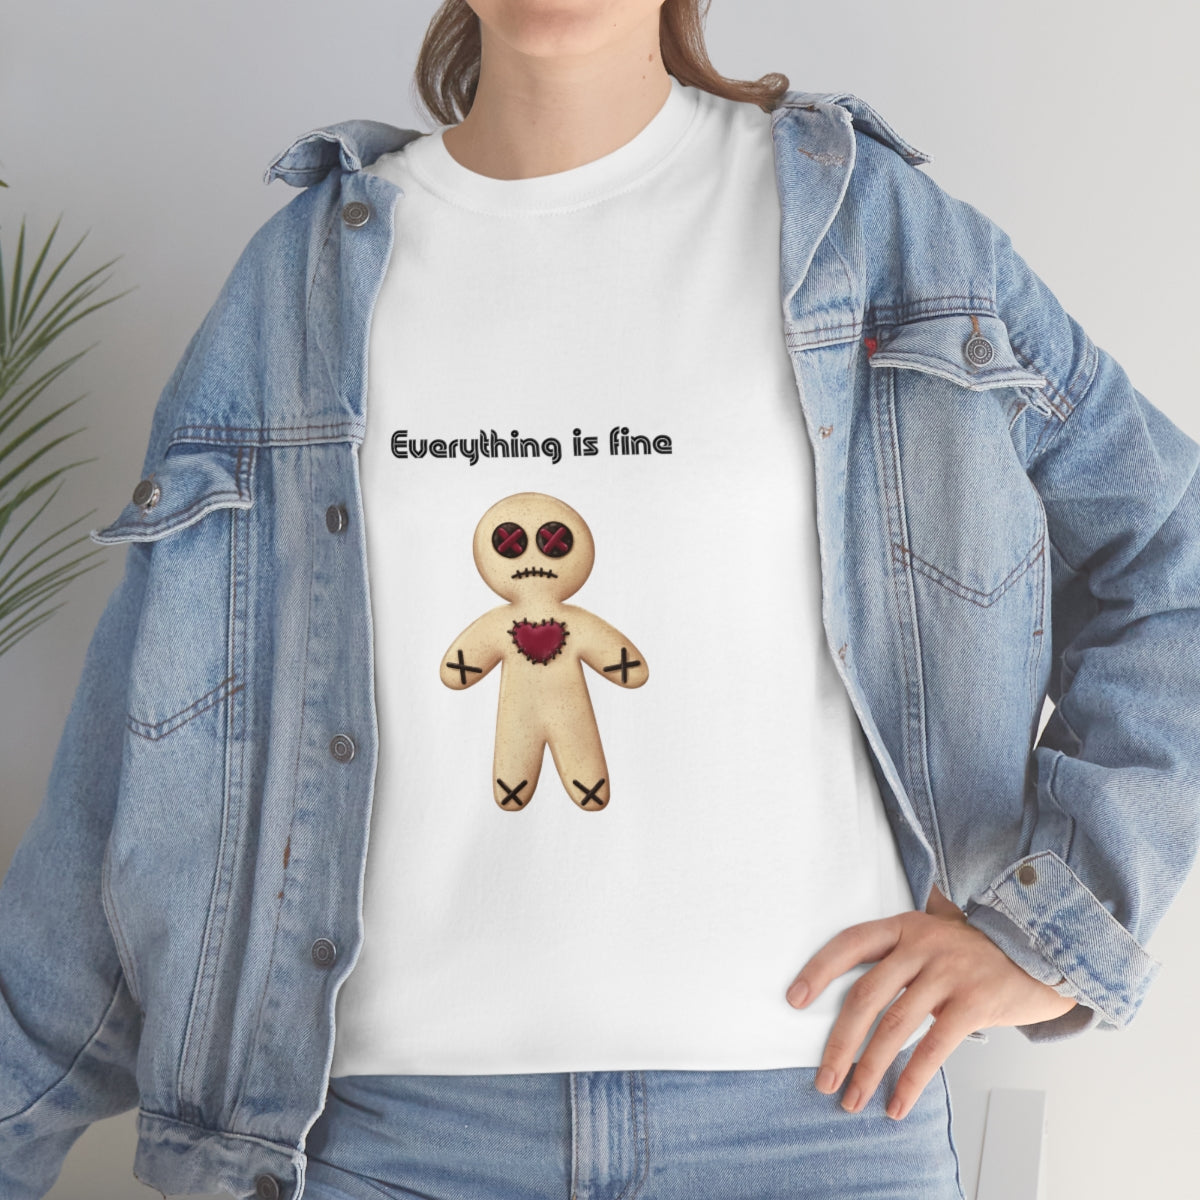 Everything is Fine Tshirt, I'm Fine Everything is Fine, Gingerbread Man, Christmas Shirt, Chronic Pain Shirt, Anxiety Shirt, FunnyTshirts - The Good Life Vibe